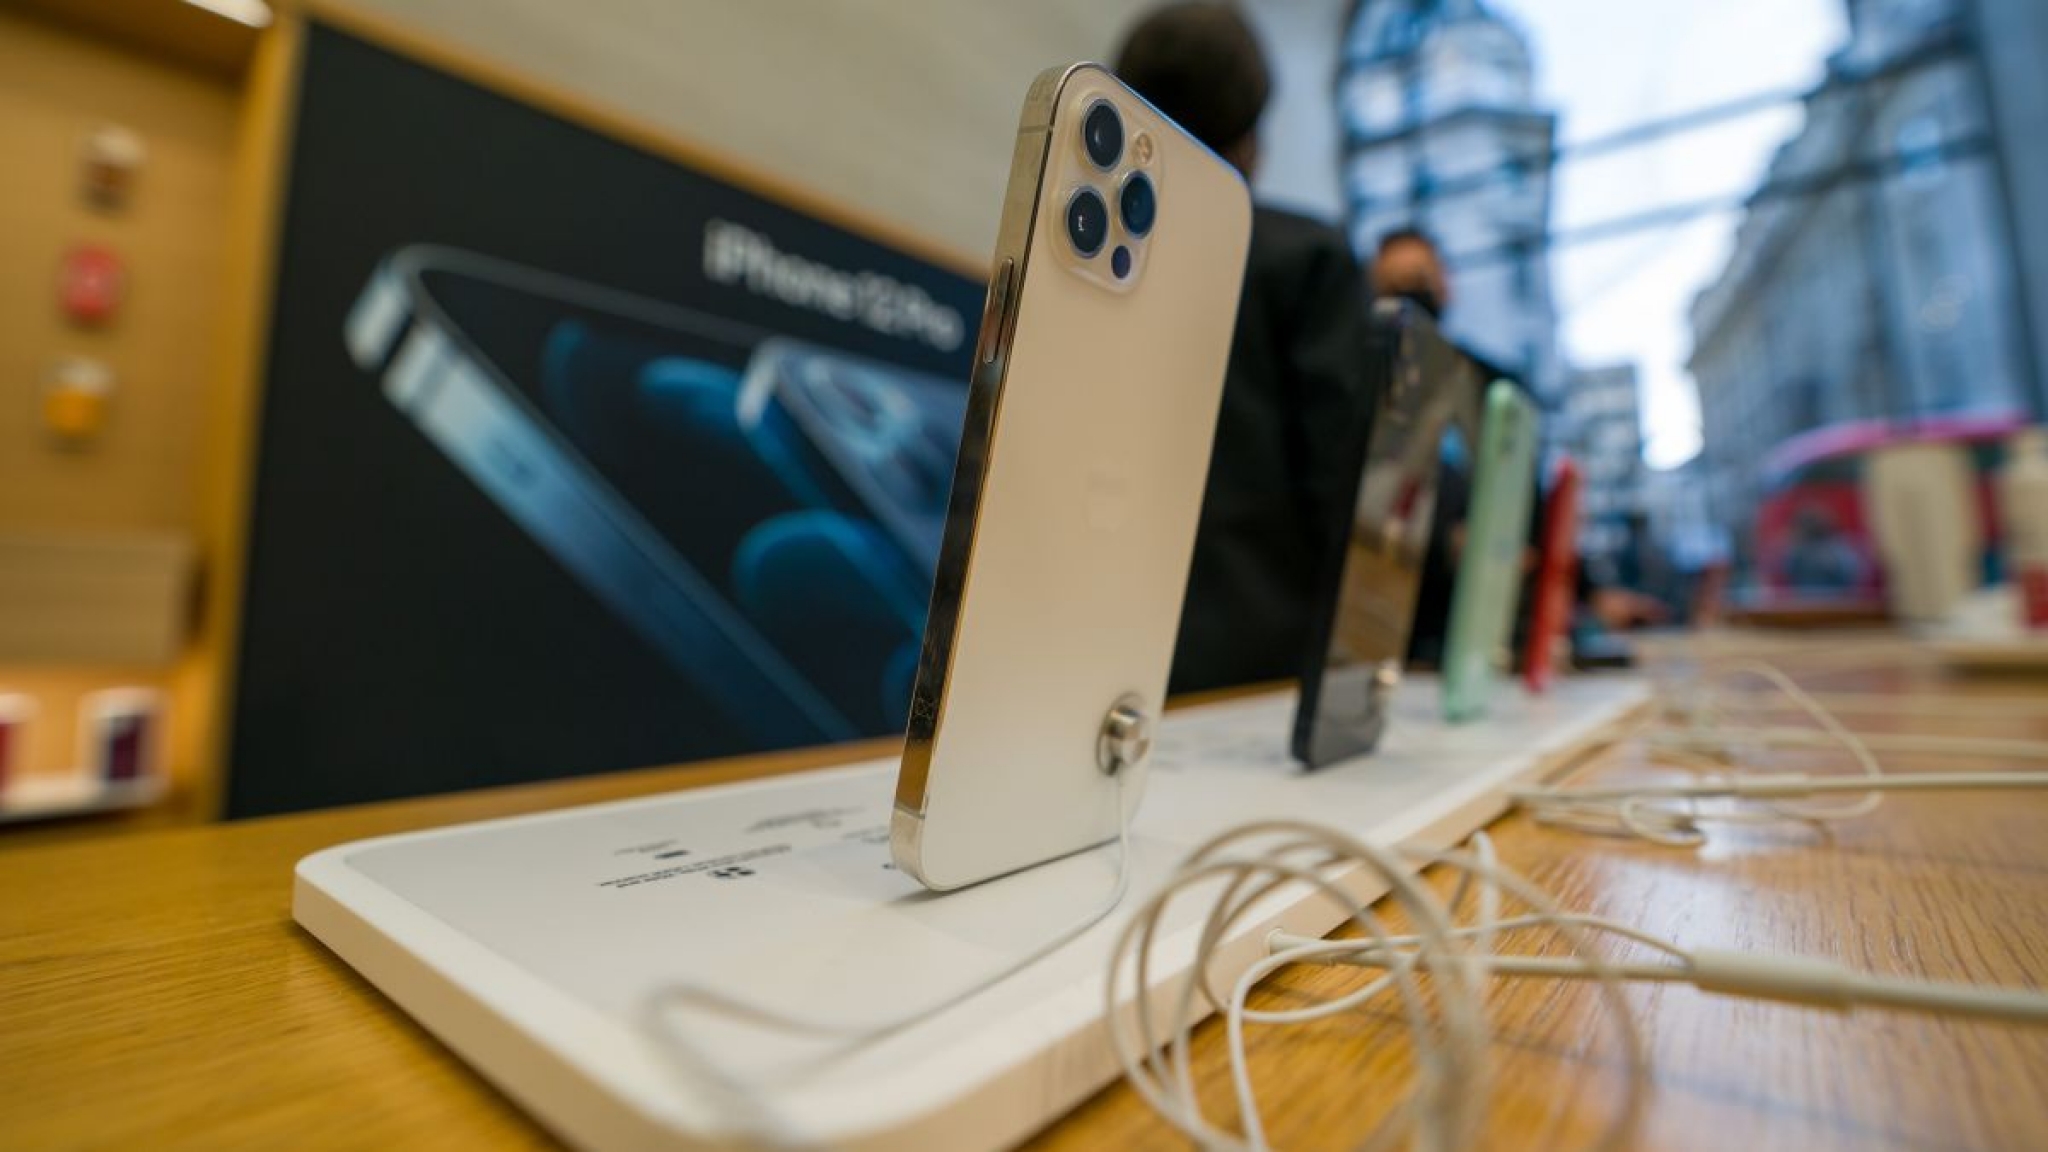 Brazilian Regulators Fine Apple Nearly $2 Million Over Charger-Less iPhone 12